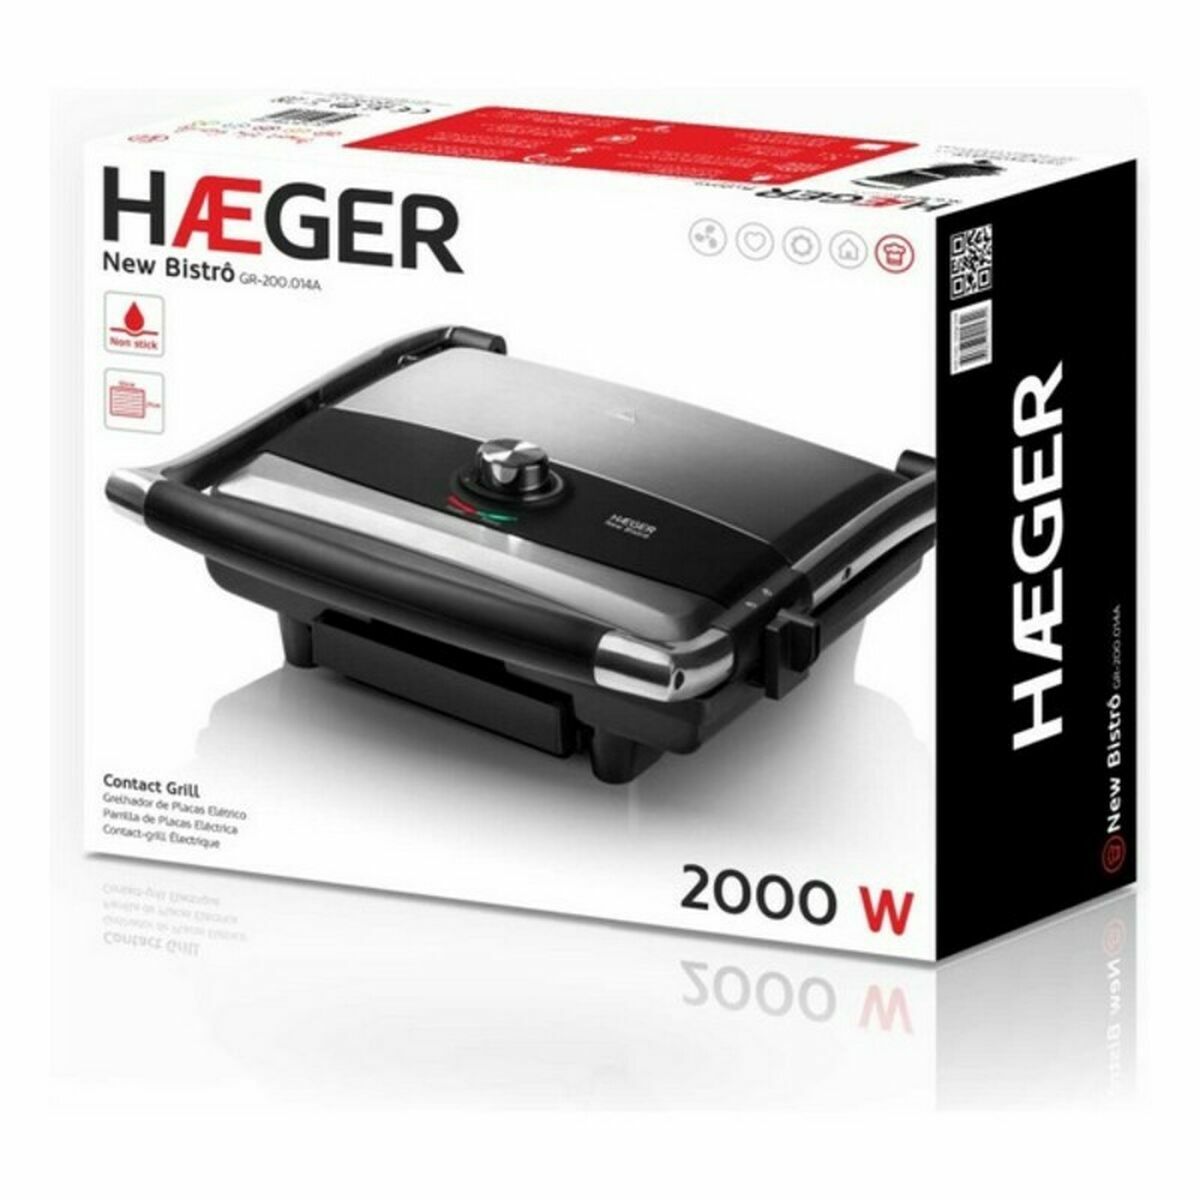 Elektrische Barbecue Haeger GR-200.014A 2000 W